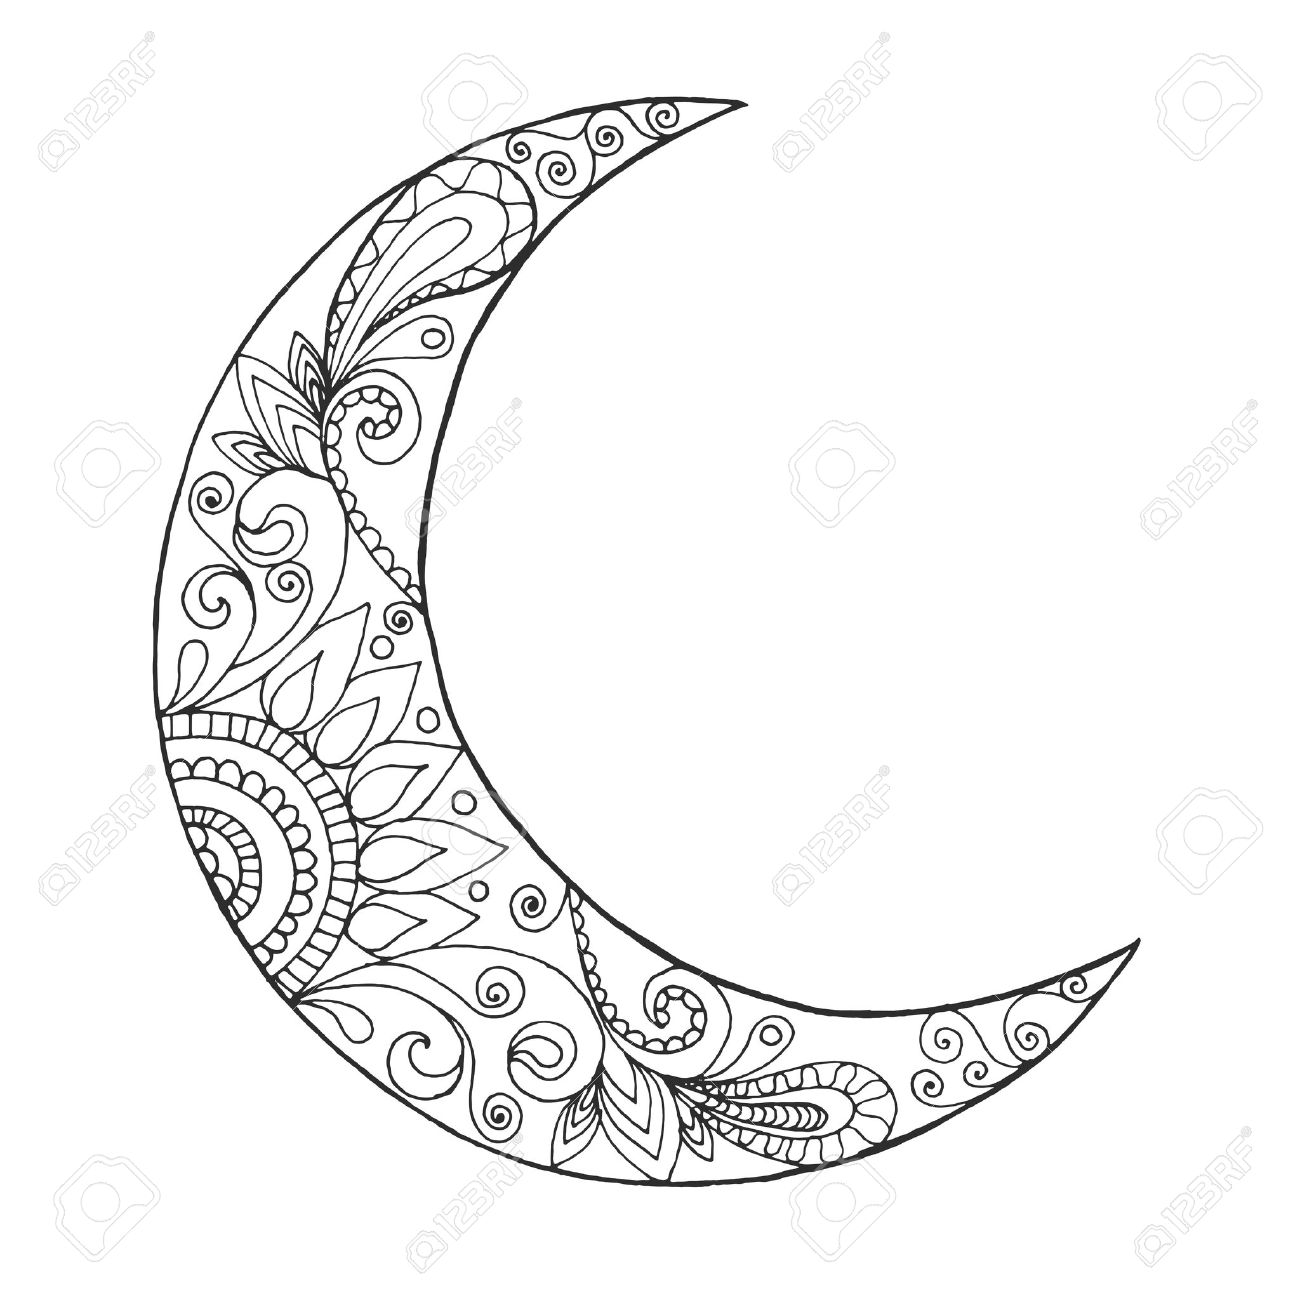 Ramadan kareem half moon greeting design coloring page engraved vector illustration sketch for decoration poster print t